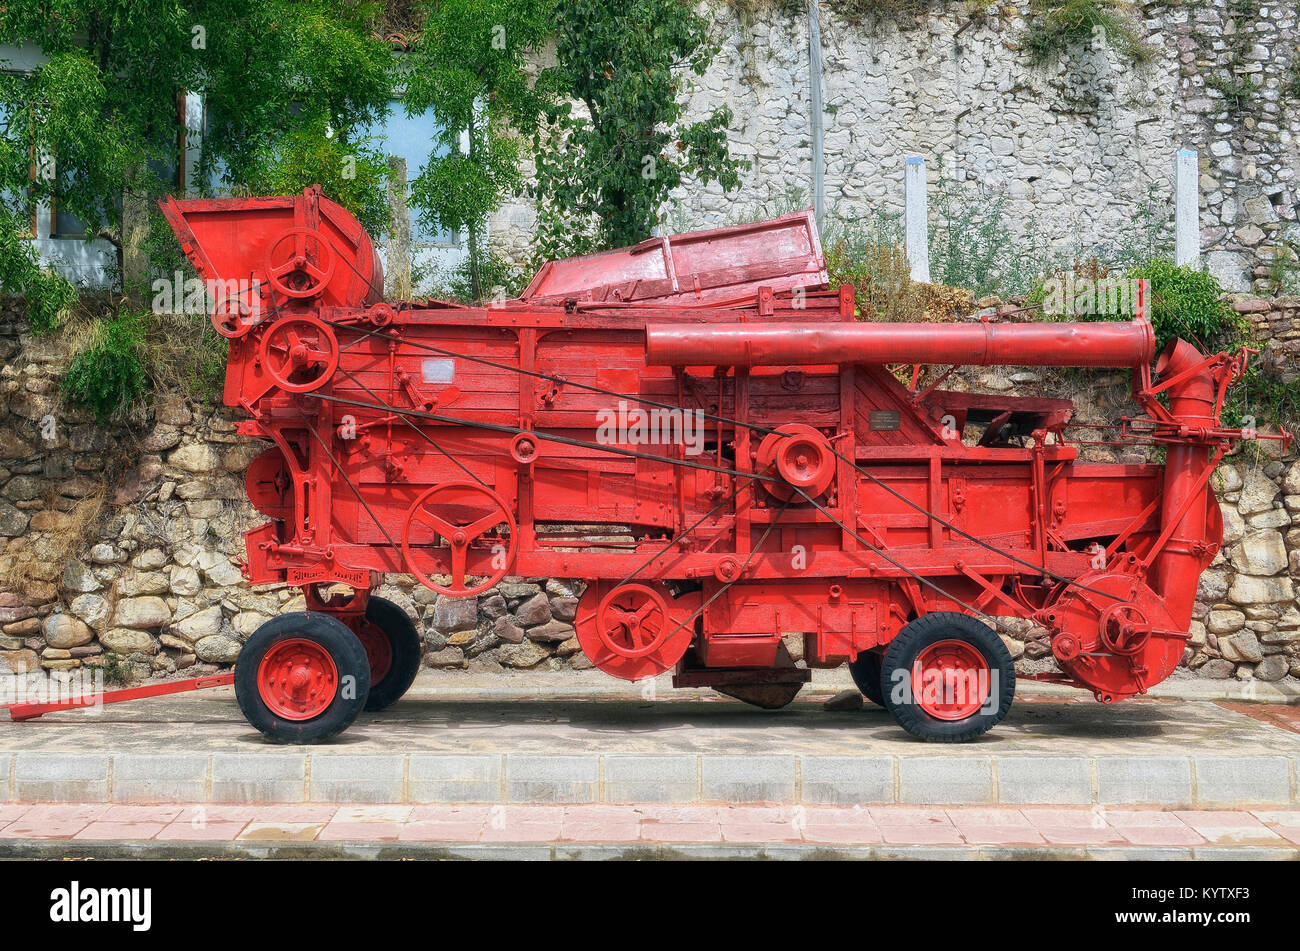 Ajuria Vitoria. Old threshing machine, donated by the family Montolio - Villanueva, in 2008 to Montan town (Castellon - Spain) Stock Photo